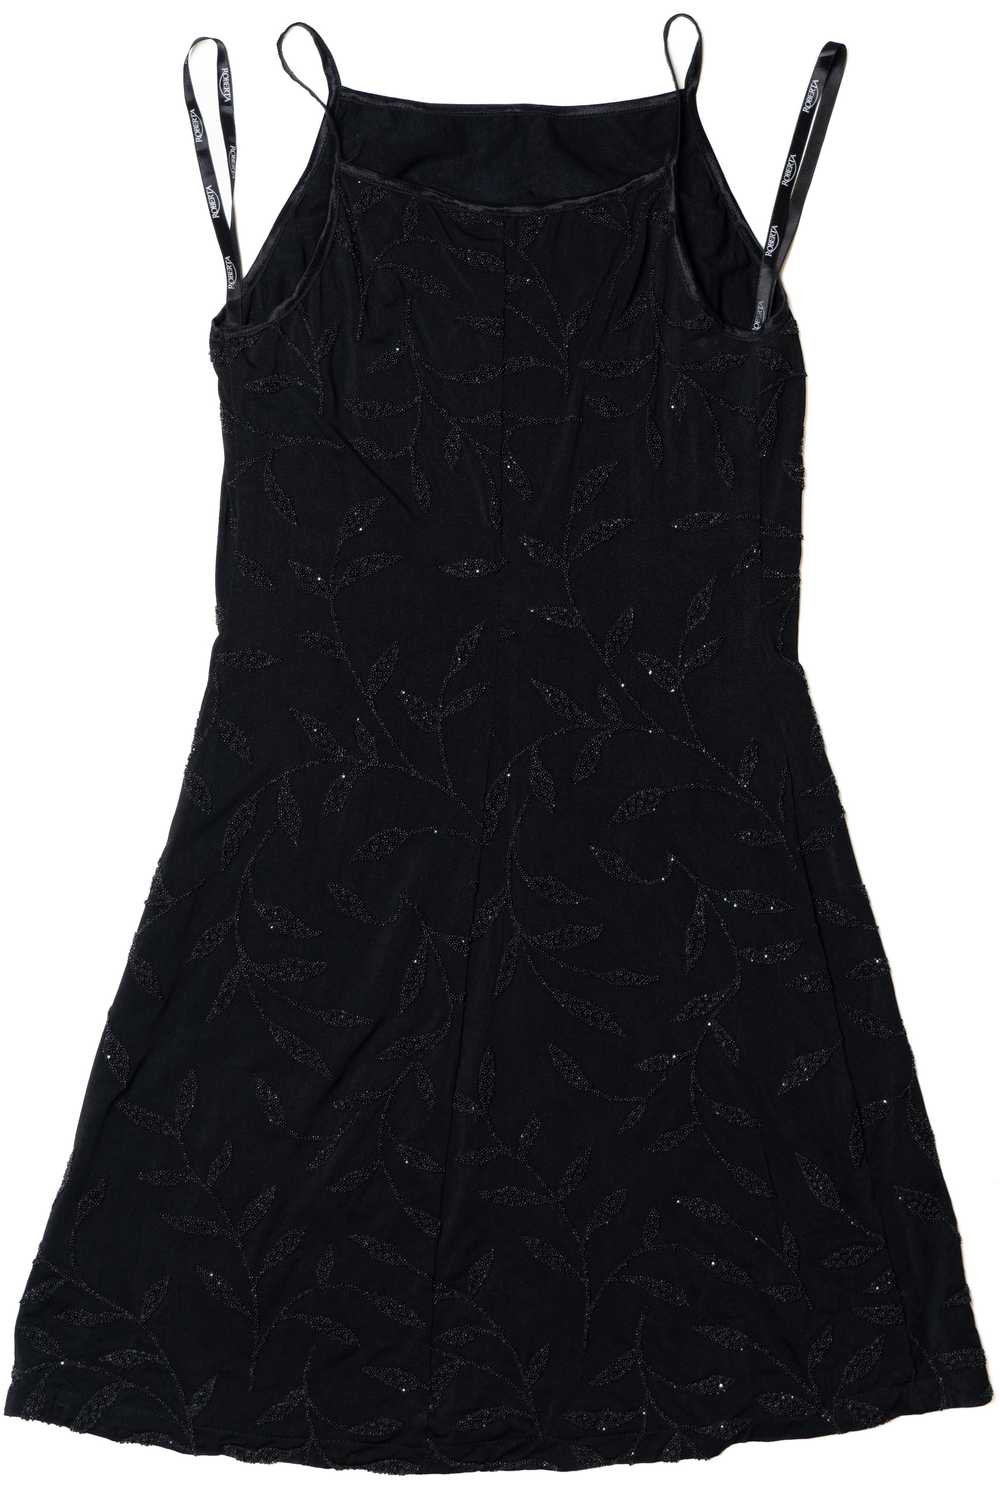 Vintage Beaded Little Black Dress - image 3